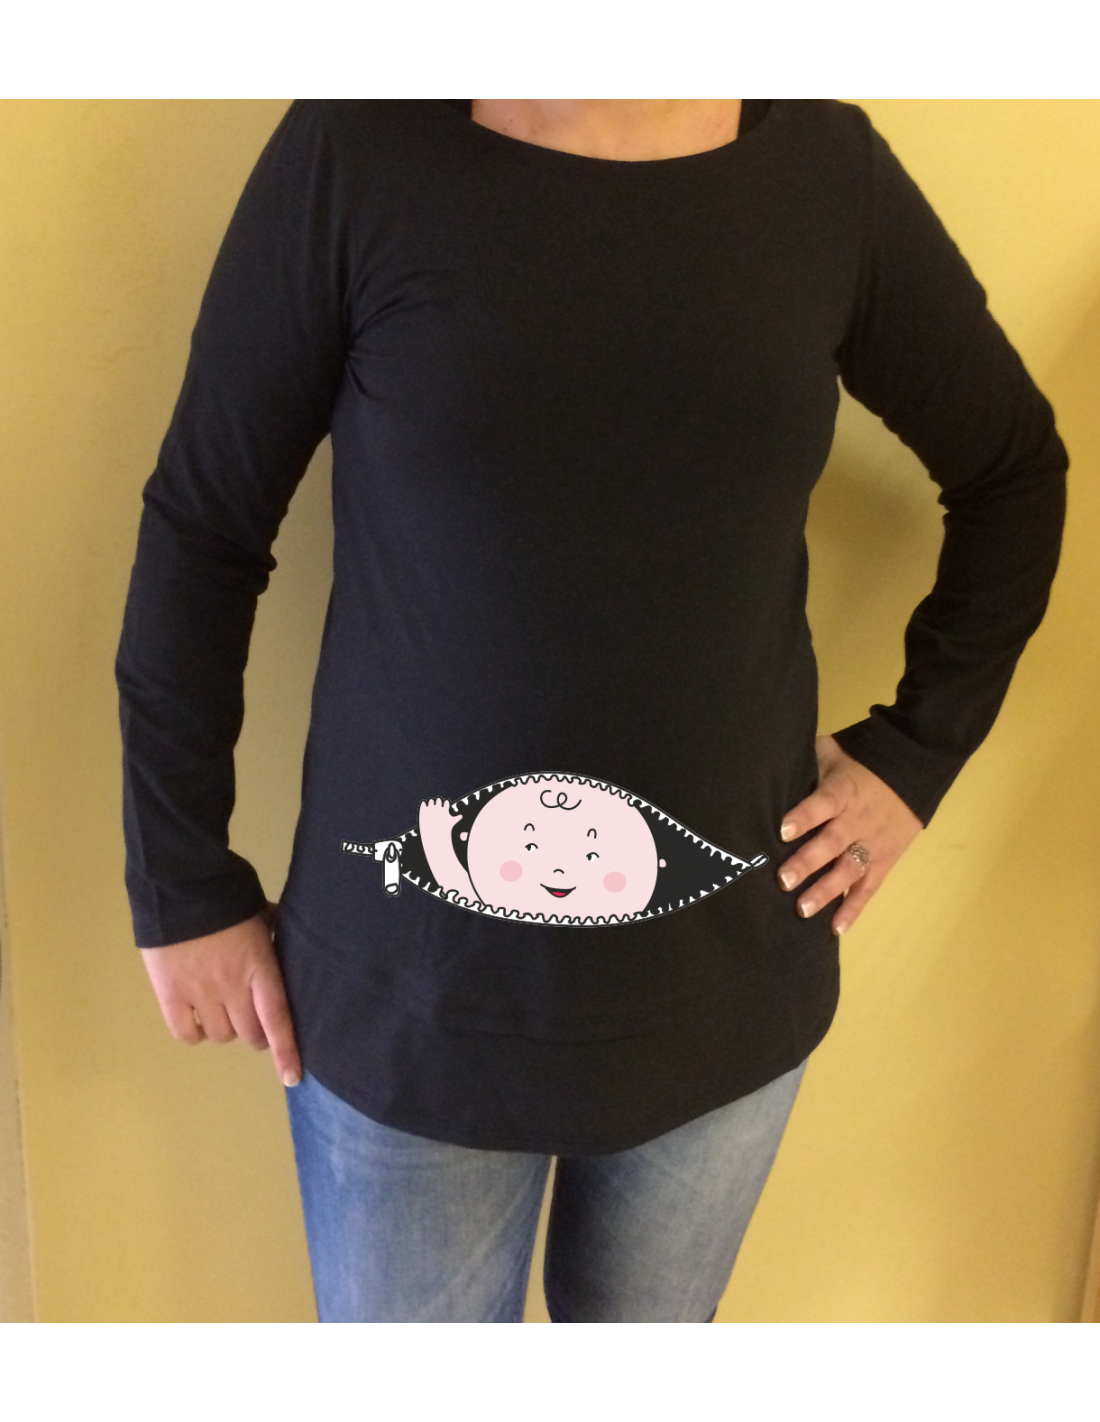 Camiseta embarazo larga bebé asomando. Tienda online Tarta.